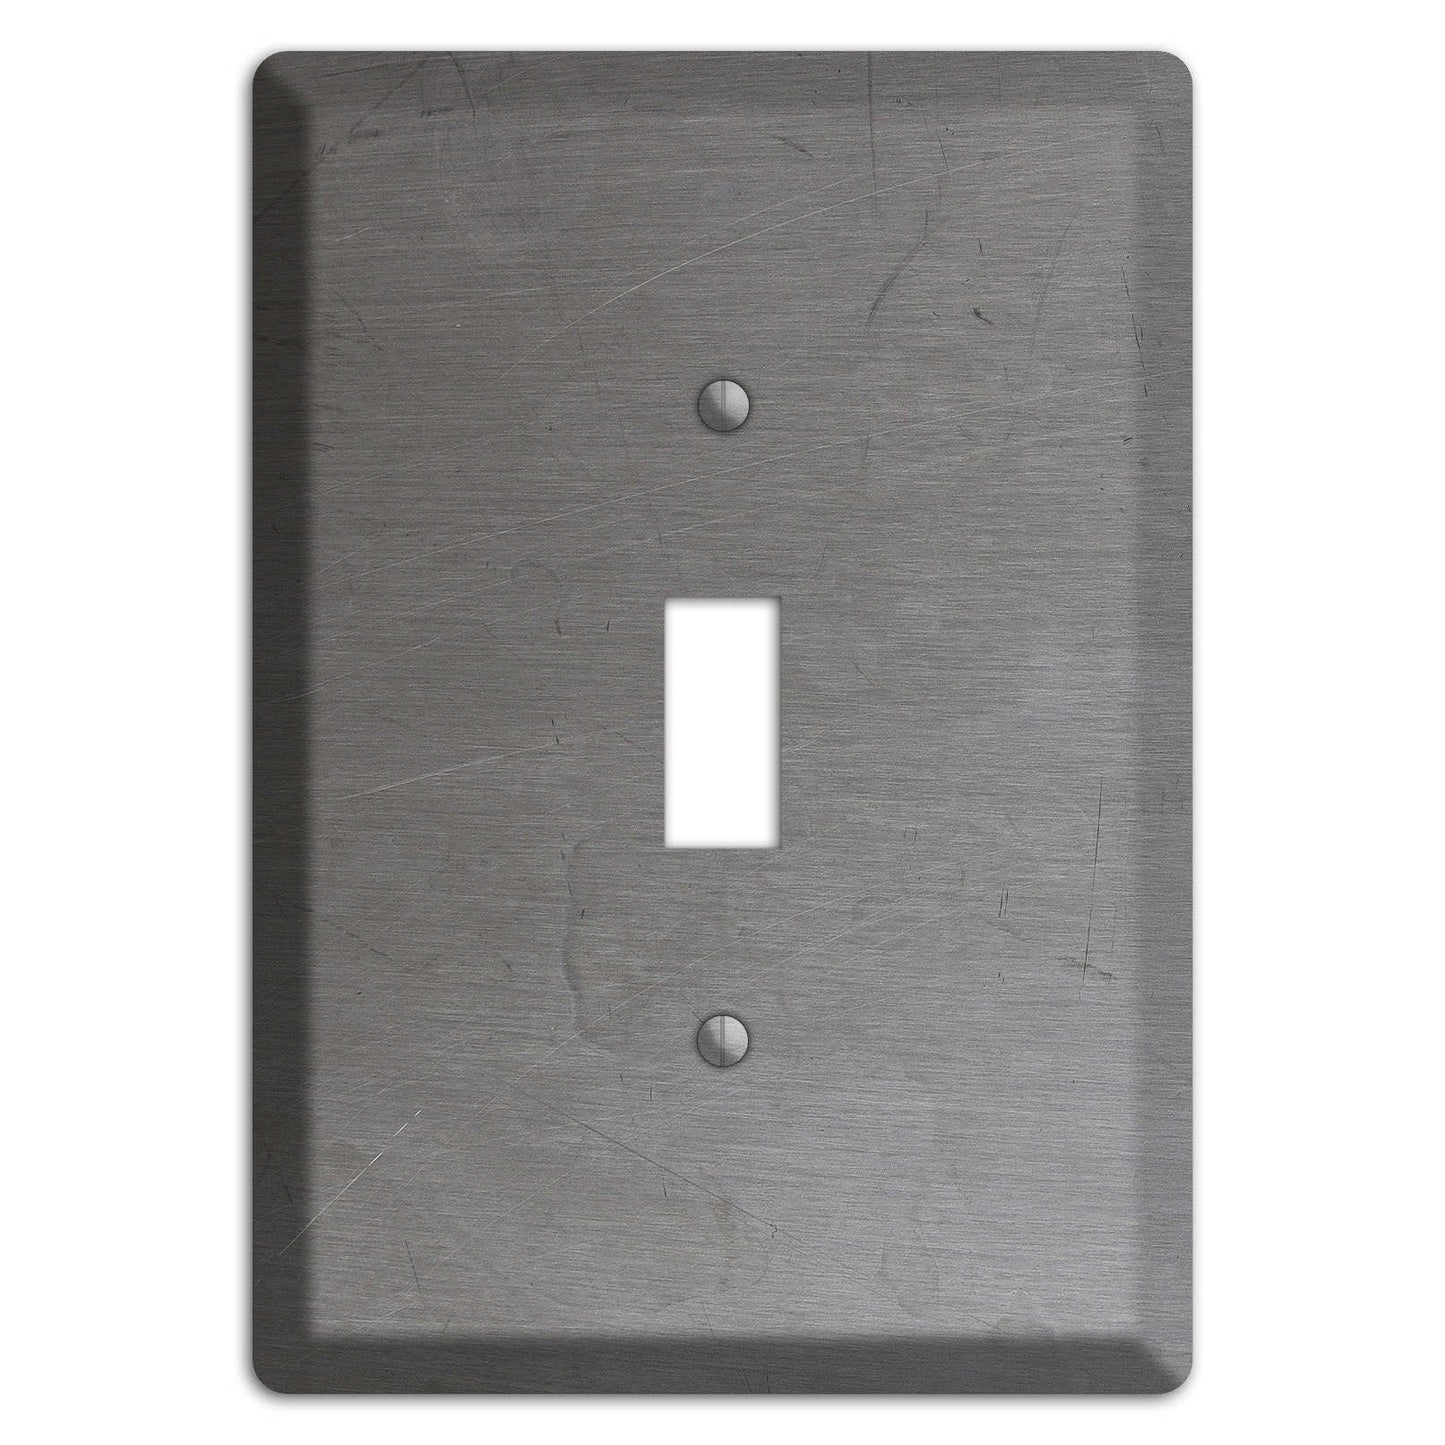 Raw Steel Cover Plates:Wallplatesonline.com